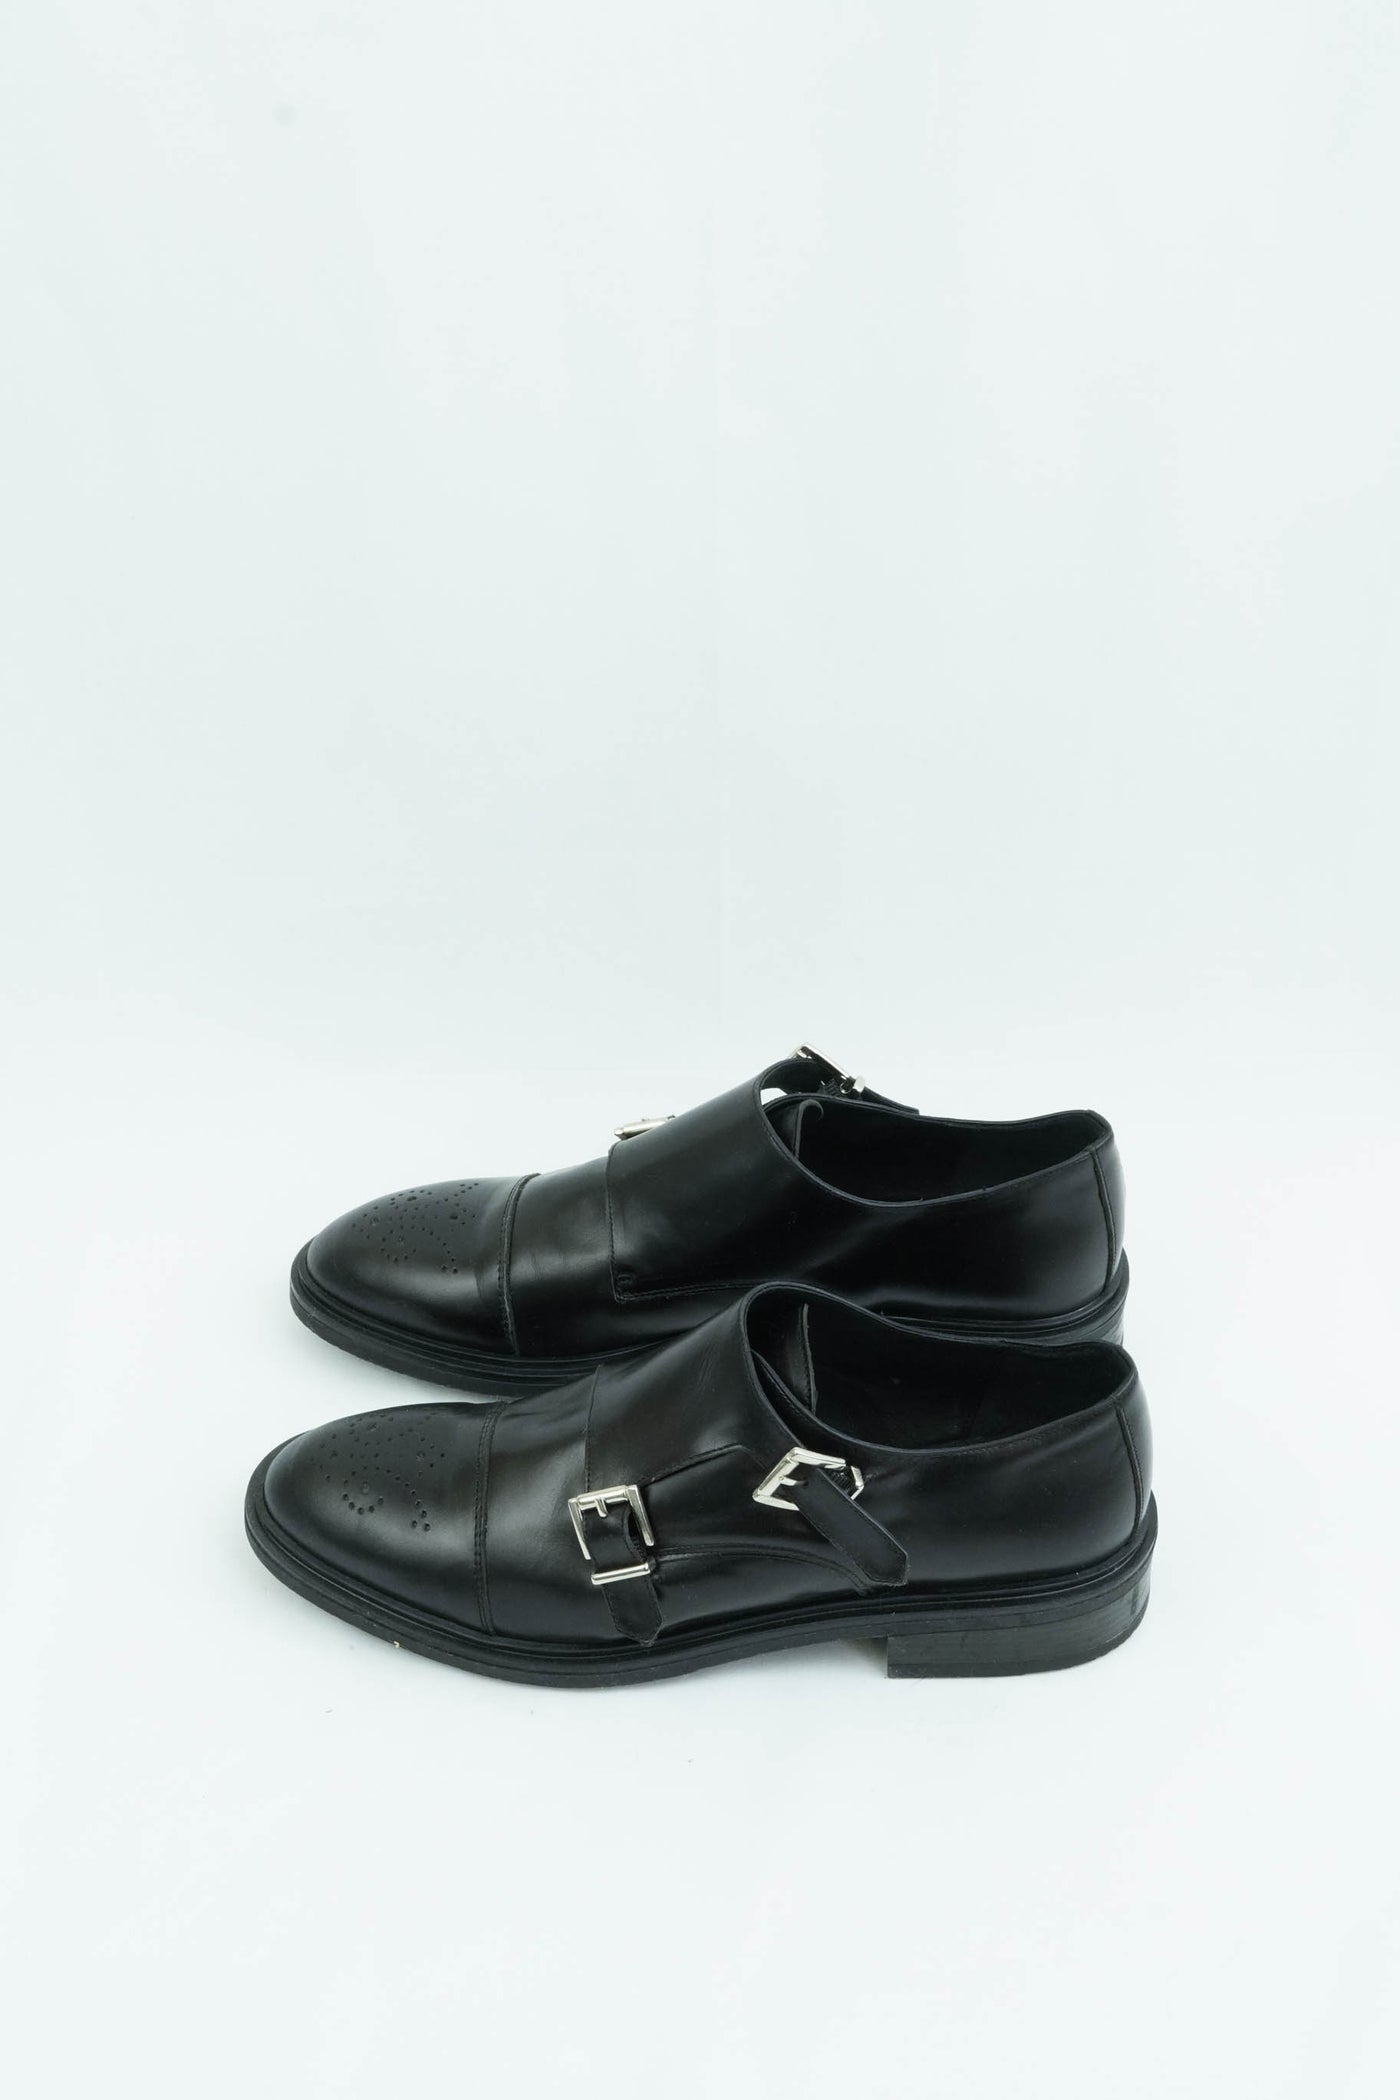 Zapatos negros de piel monkstrap